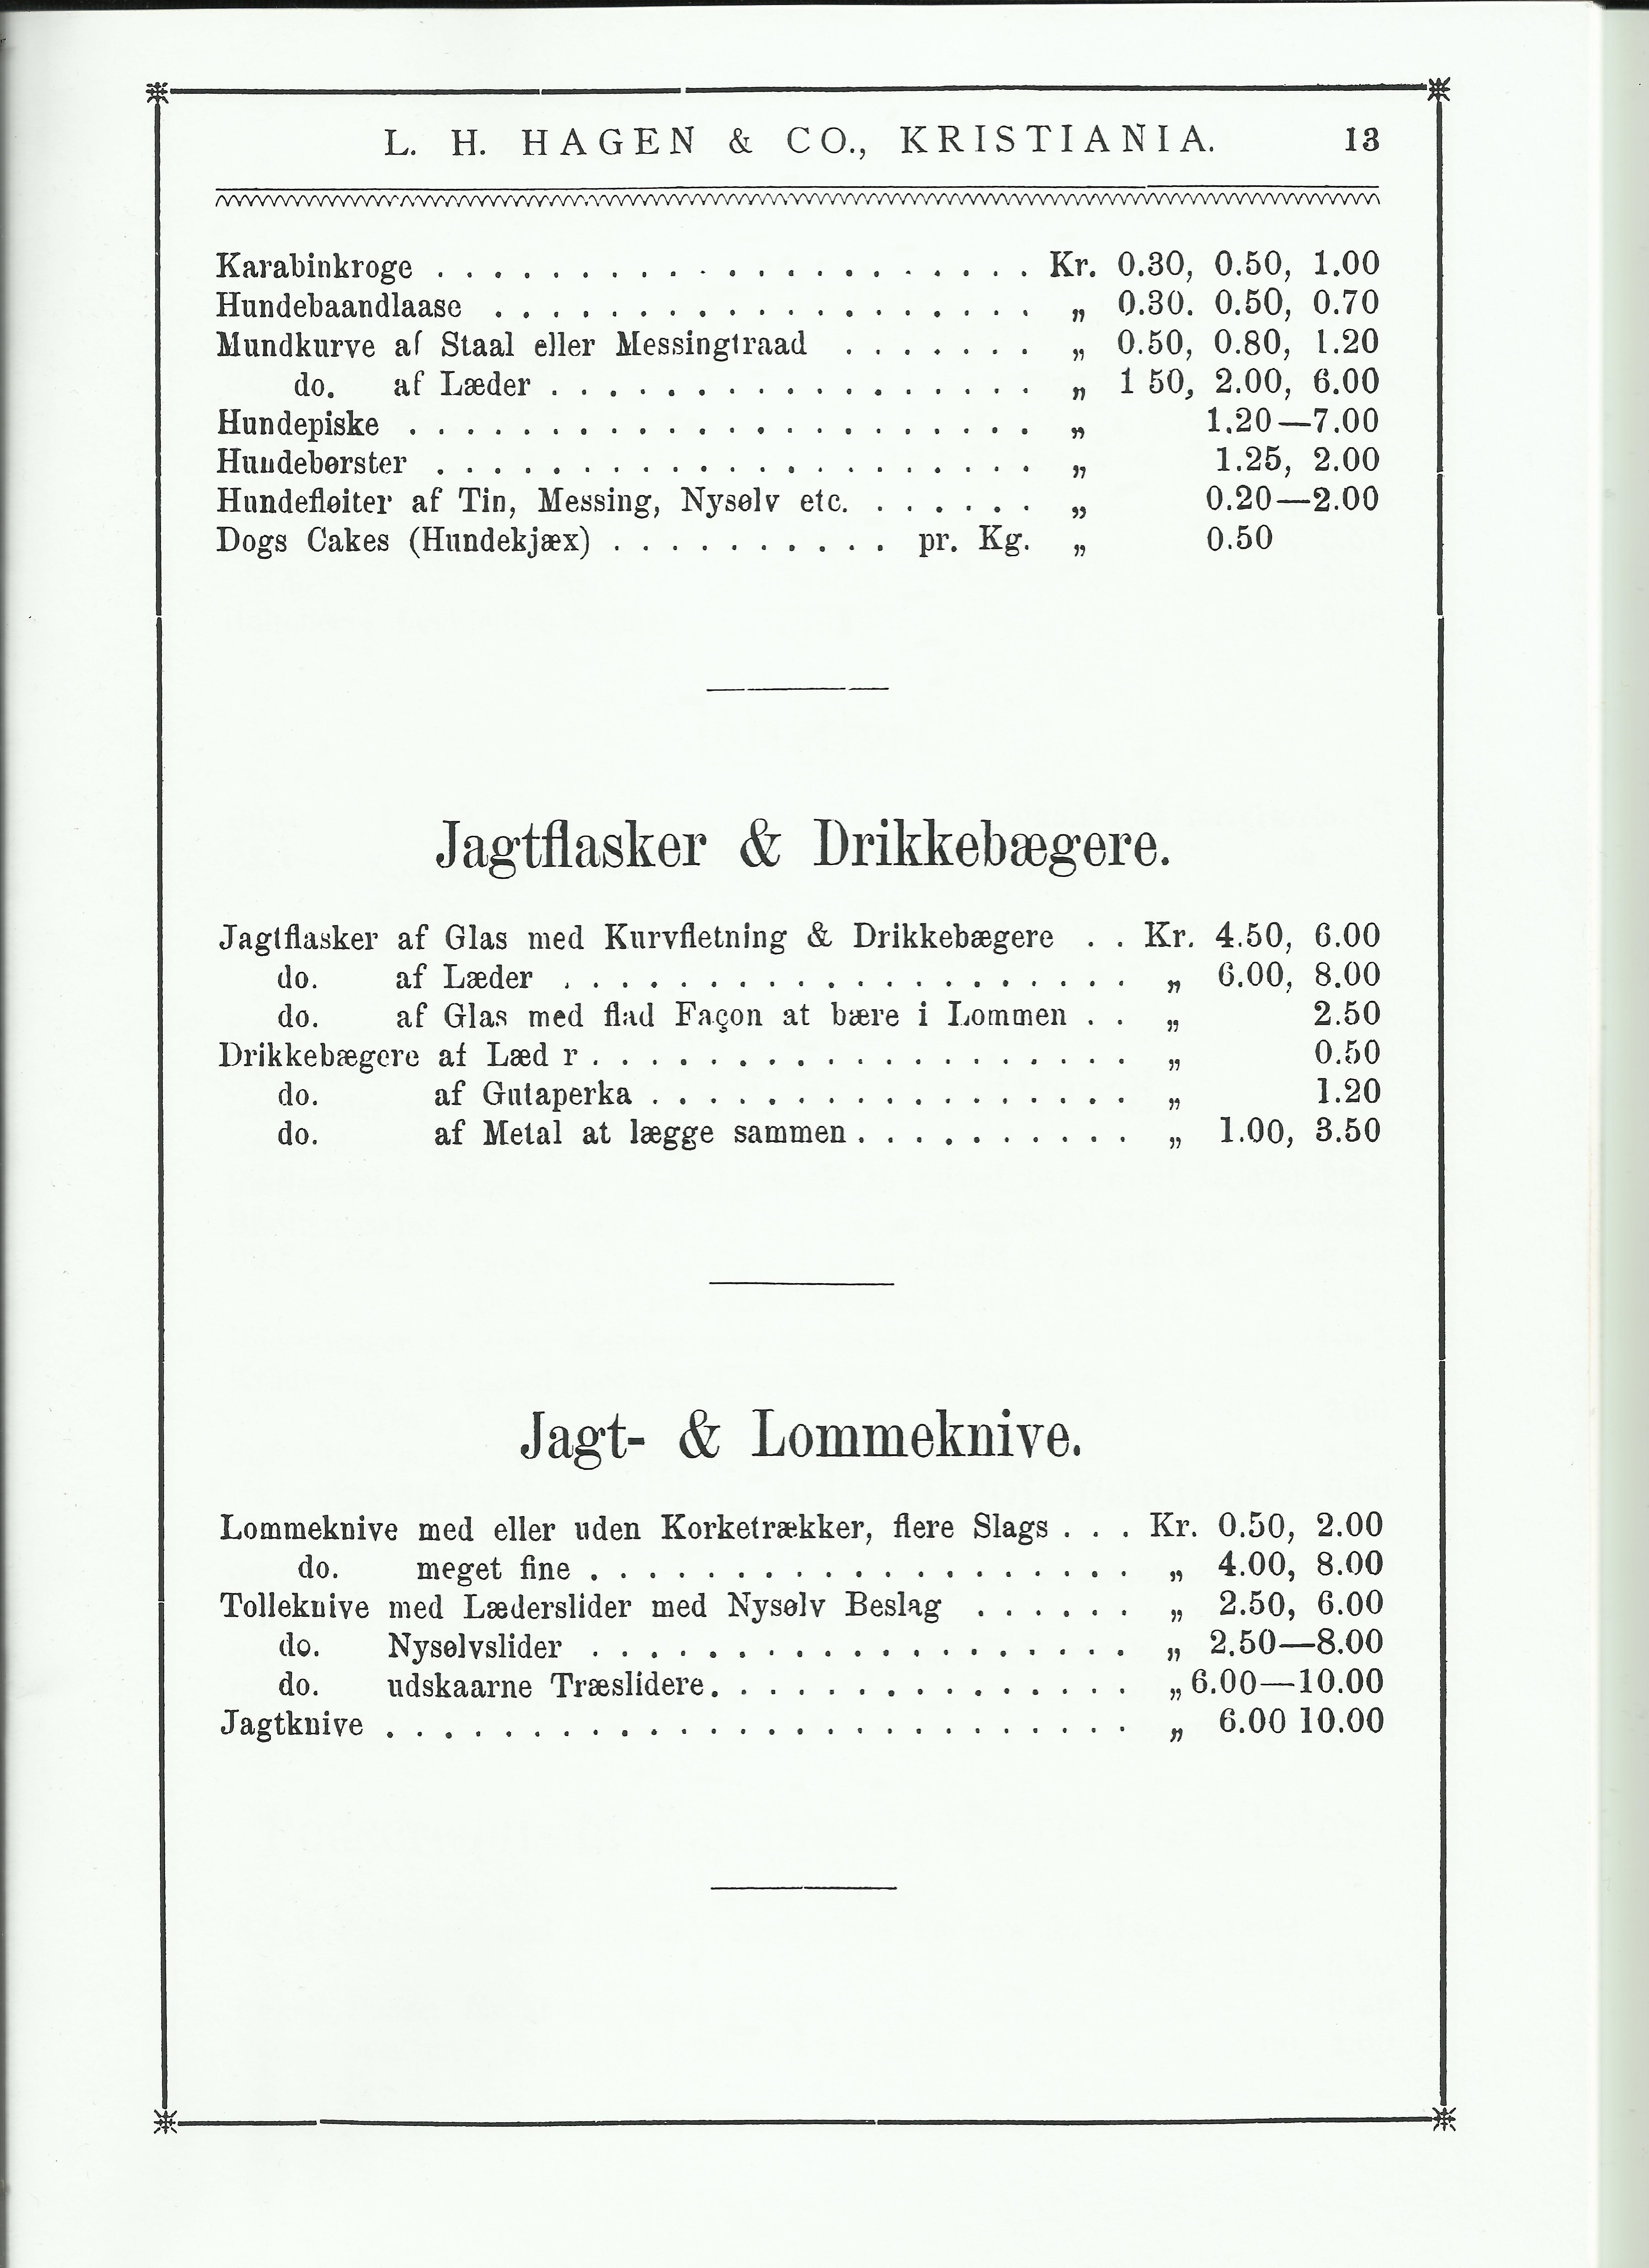 ./doc/diverse/Katalog-Hagen-189x-Side-13.jpg